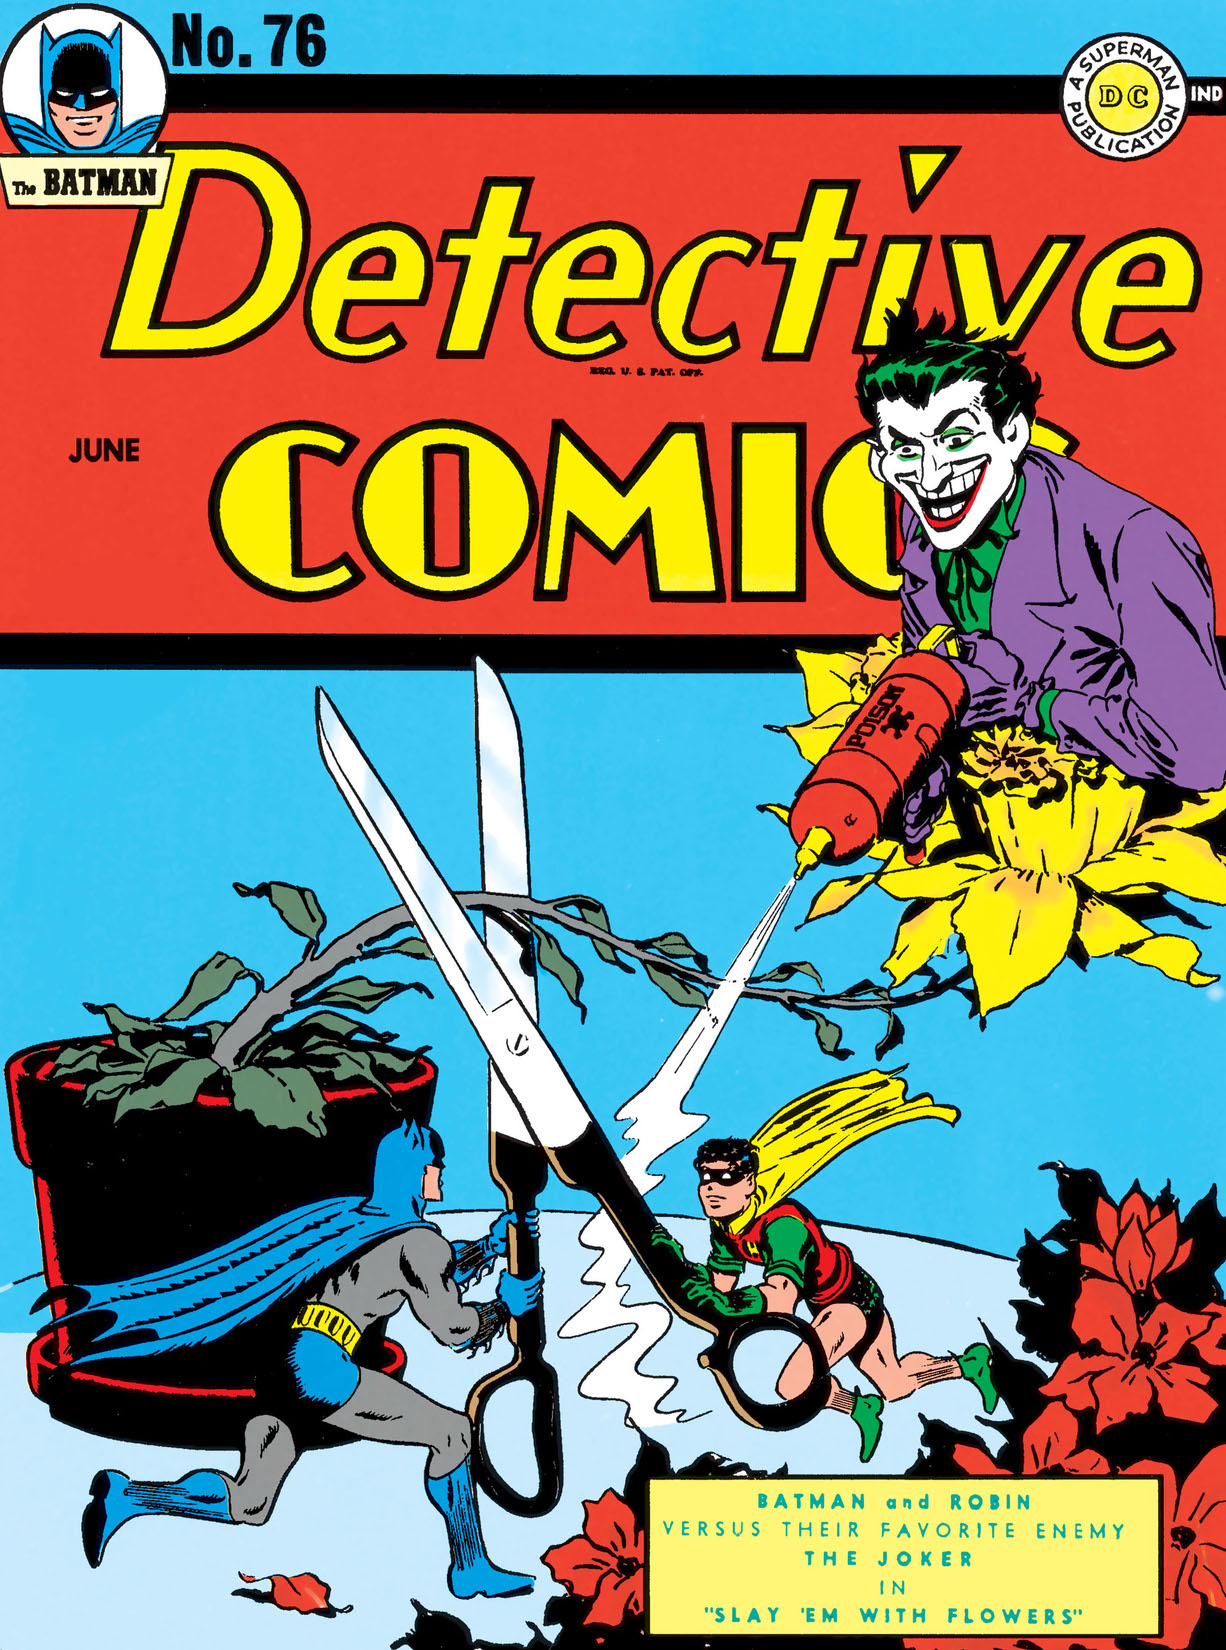 Detective Comics (1942-) #76 preview images